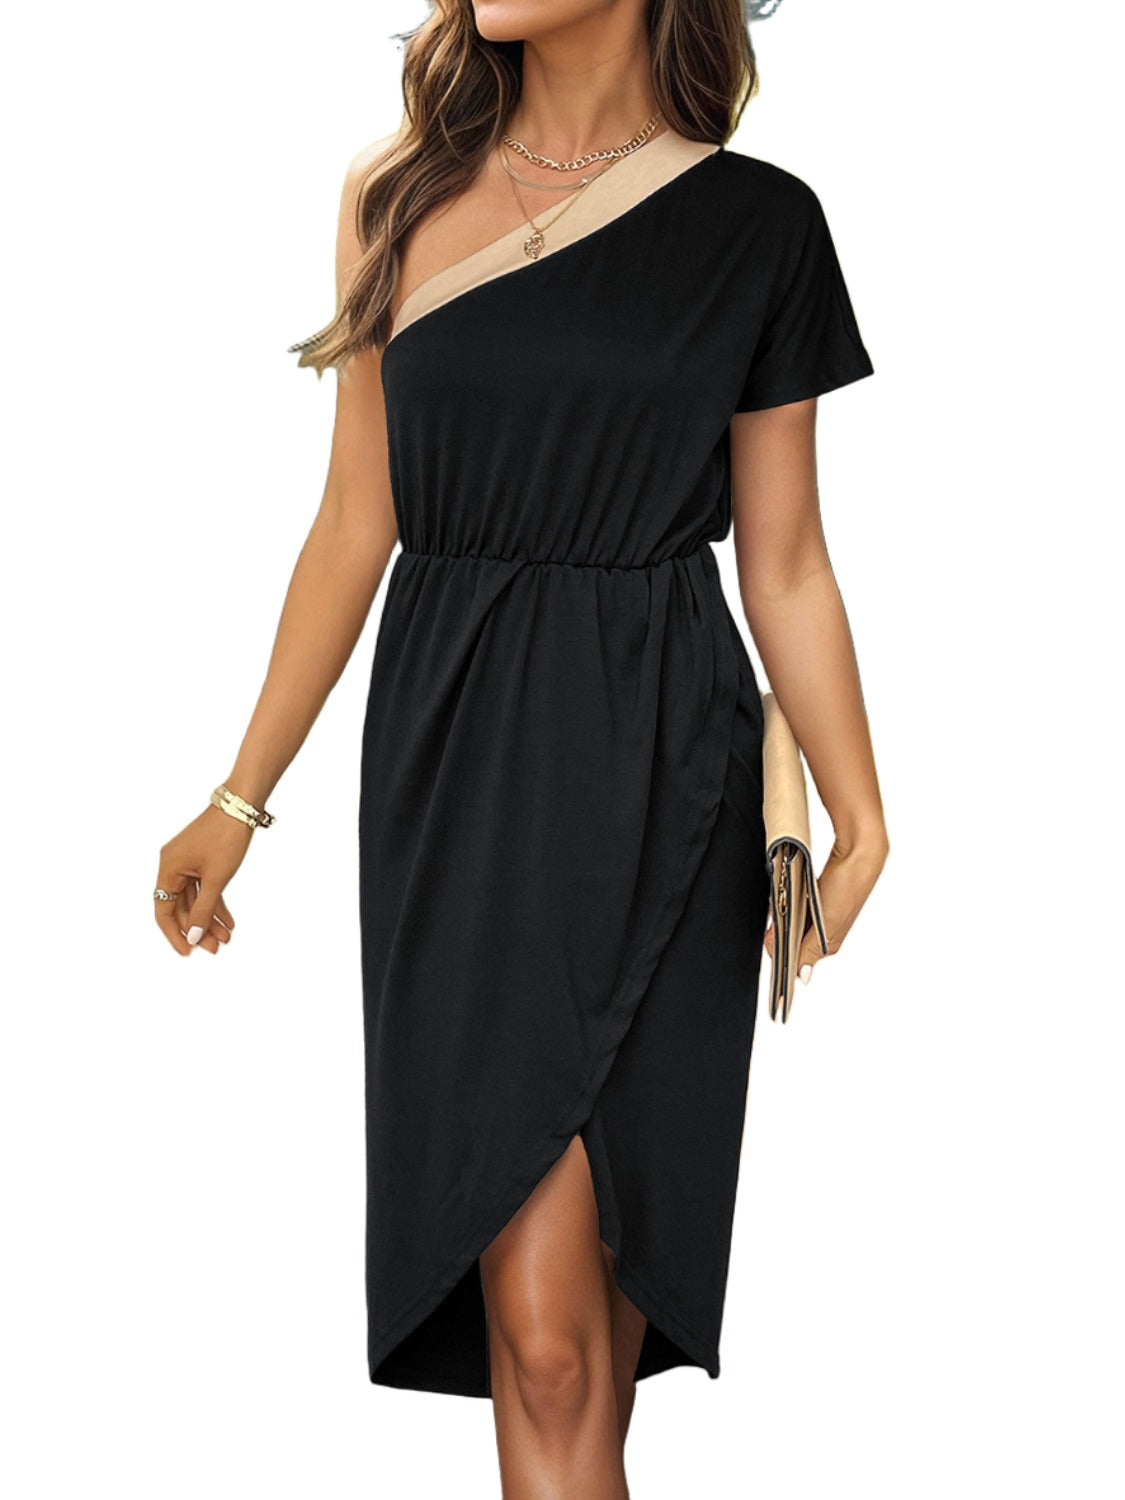 TEEK - Black Slit Single Shoulder Short Sleeve Dress DRESS TEEK Trend   